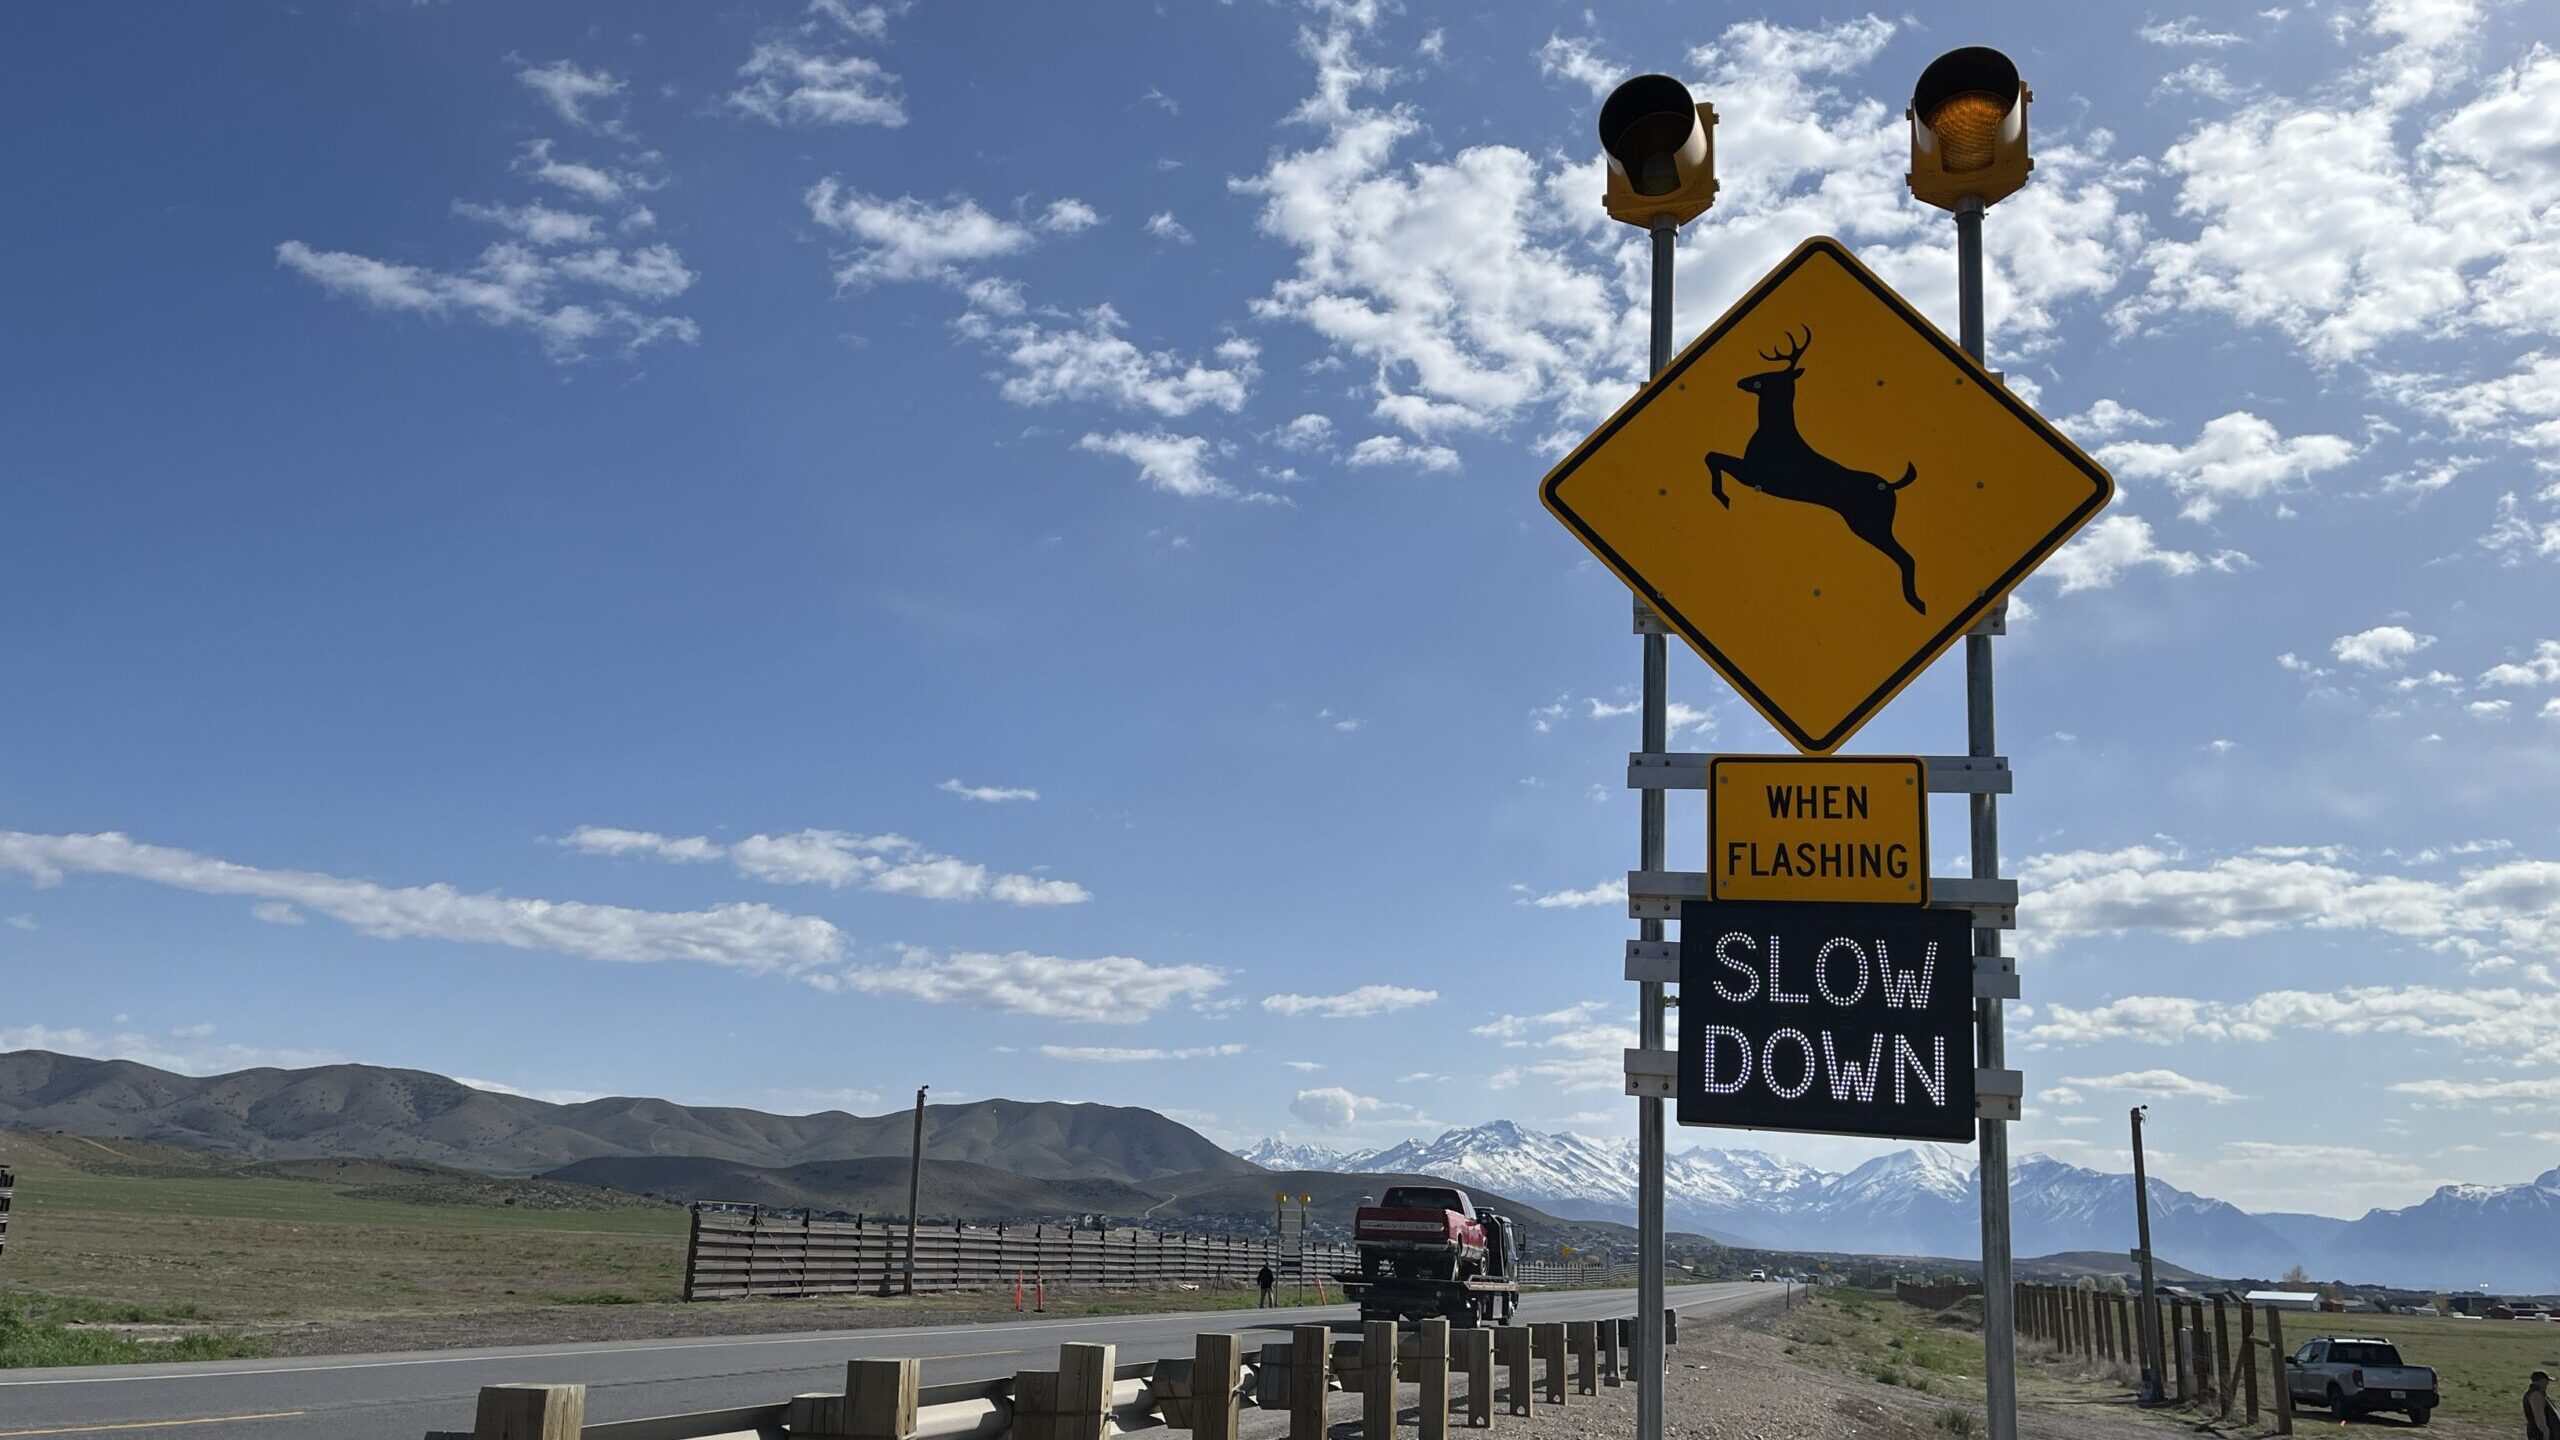 Deer crossing sign...